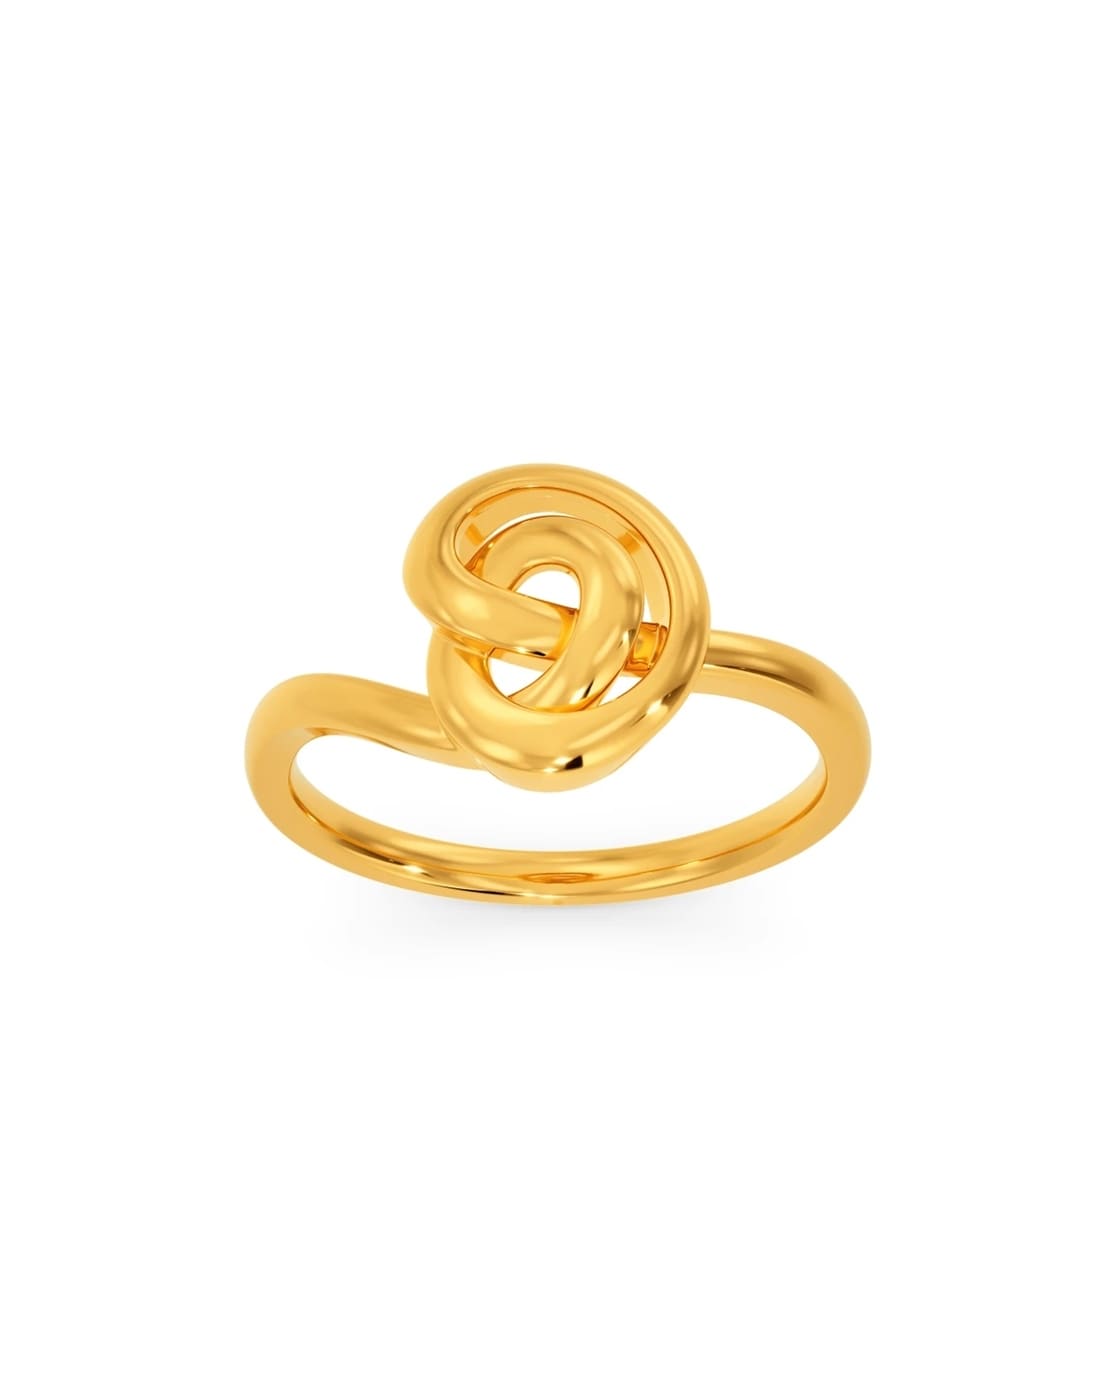 22 Carat Modern Ladies Polished Gold Finger Ring, 3gm at Rs 16000 in Jaipur